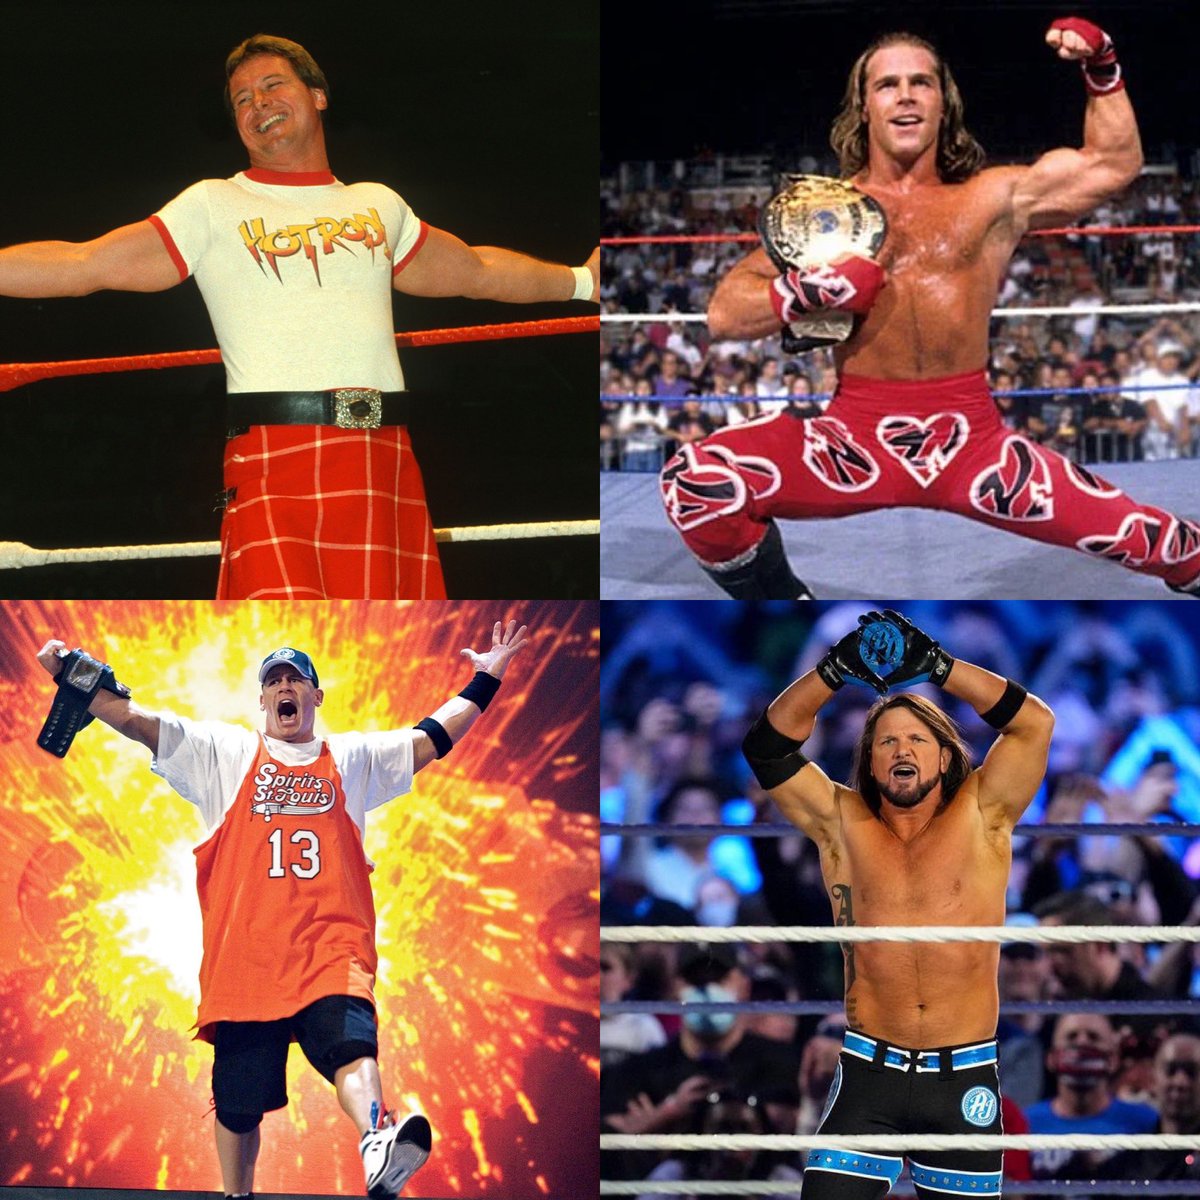 Men:
Roddy Piper 
Shawn Michaels 
John Cena 
AJ Styles

Women:
Wendi Richter 
Jacqueline 
Trish Stratus
Bianca Belair https://t.co/vhYGMSl8nq https://t.co/N29dwkKVXS